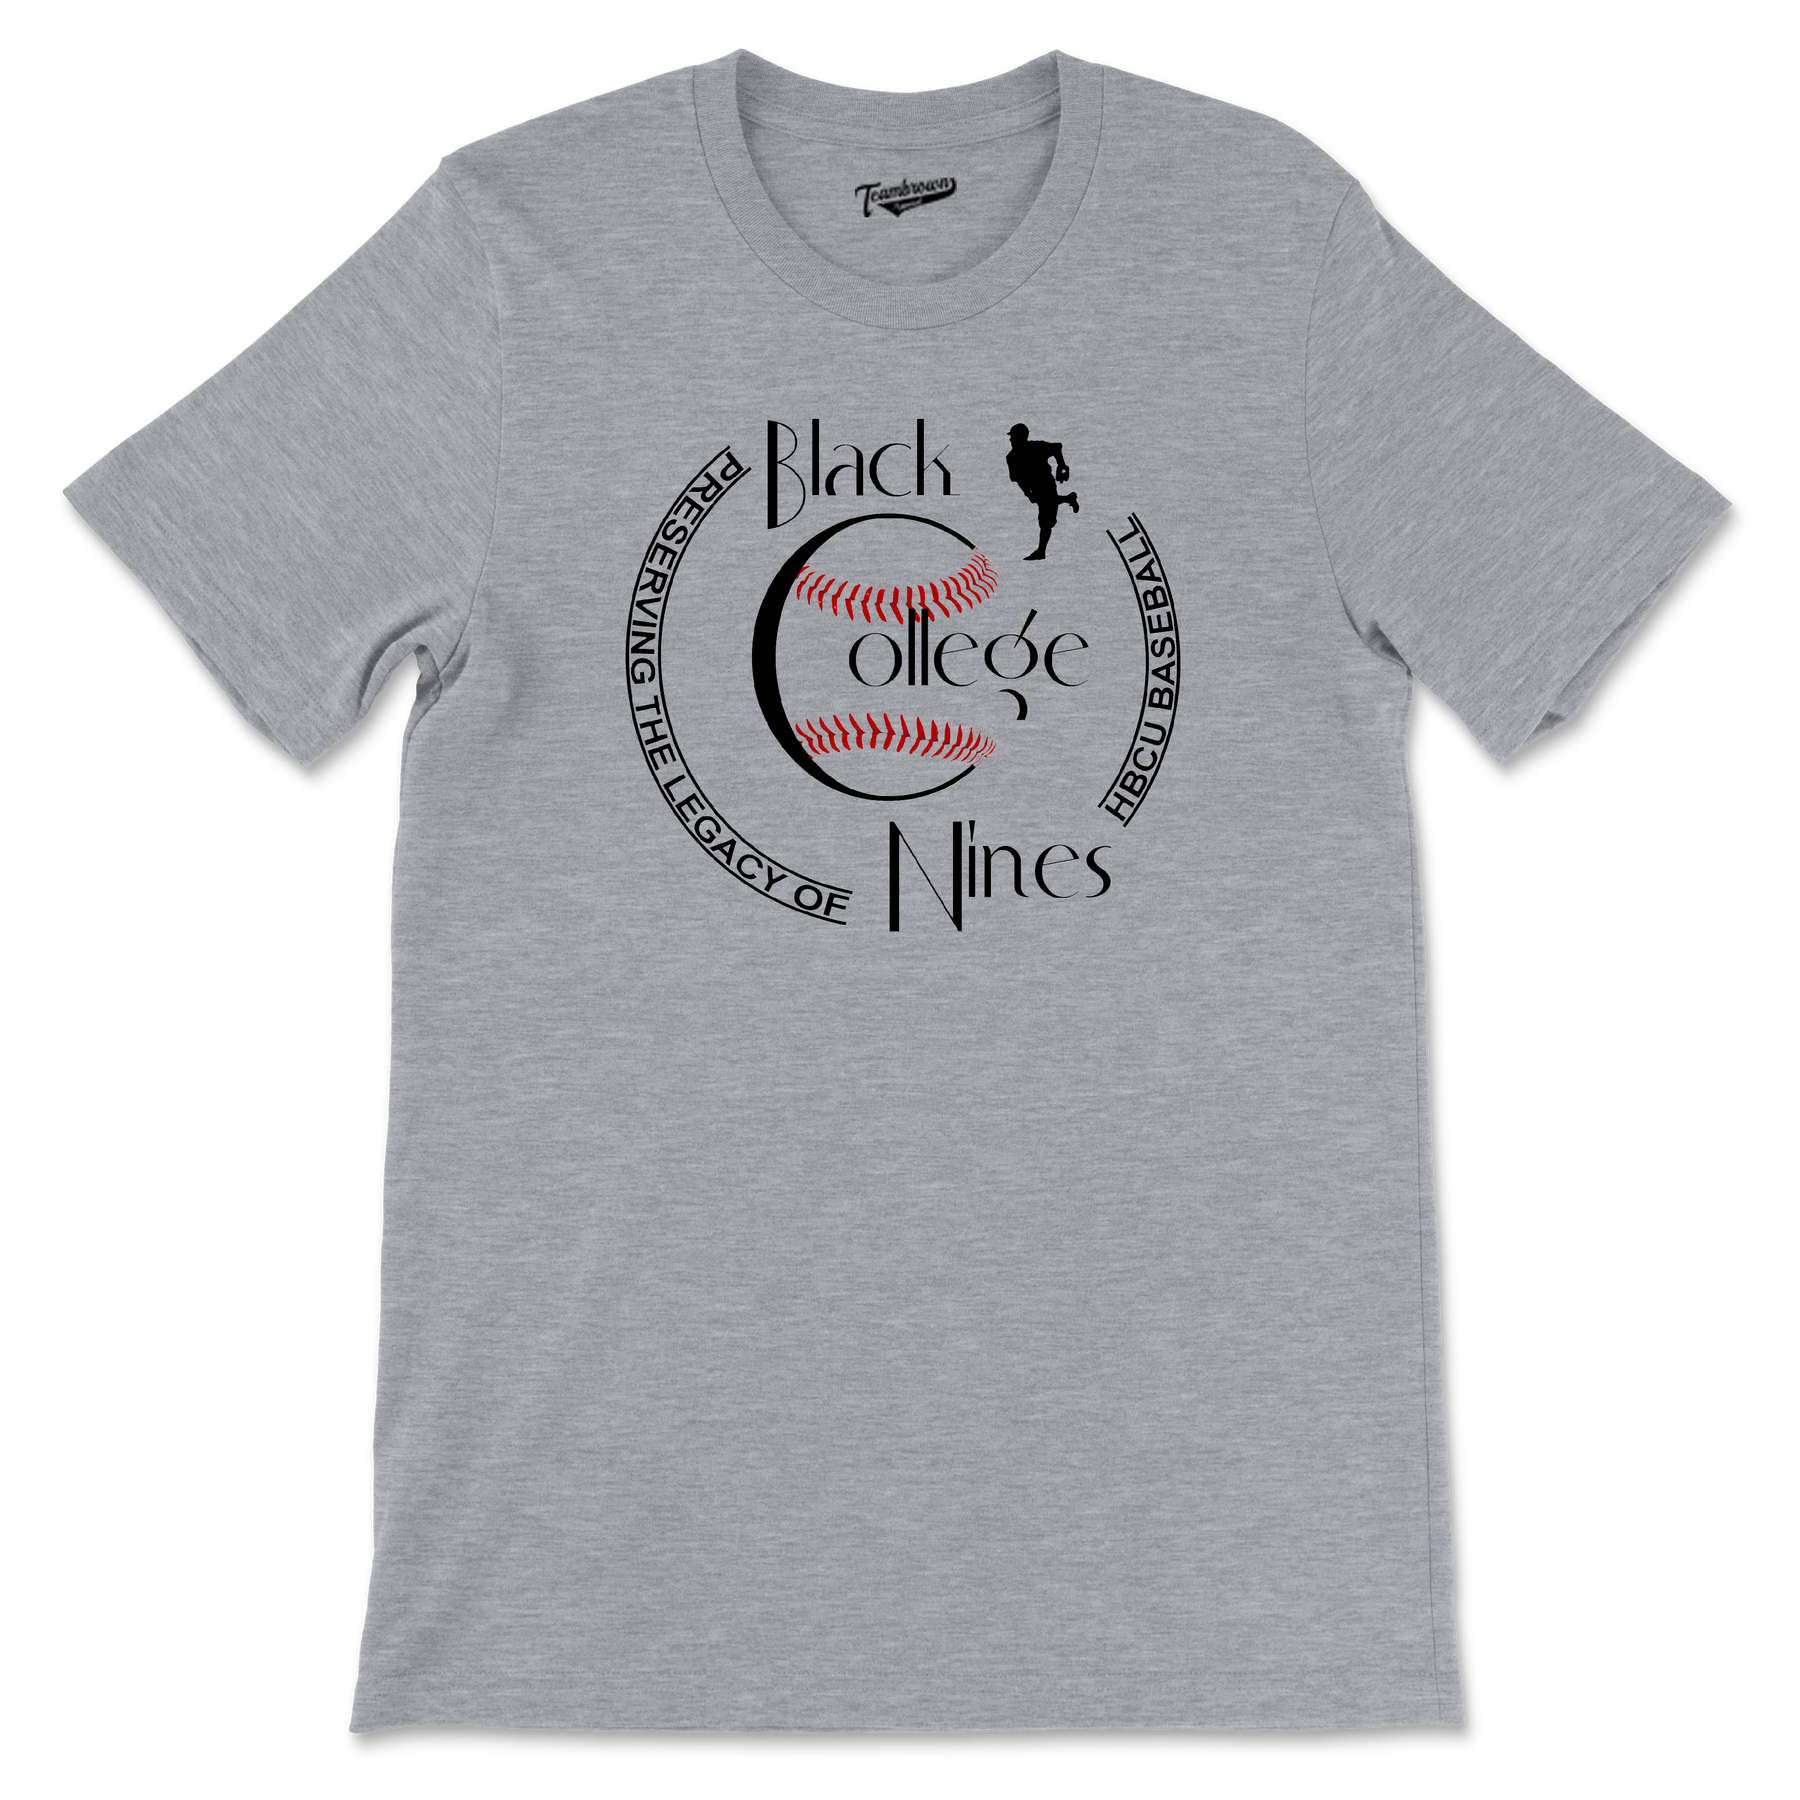 Black College Nines - Unisex T-Shirt